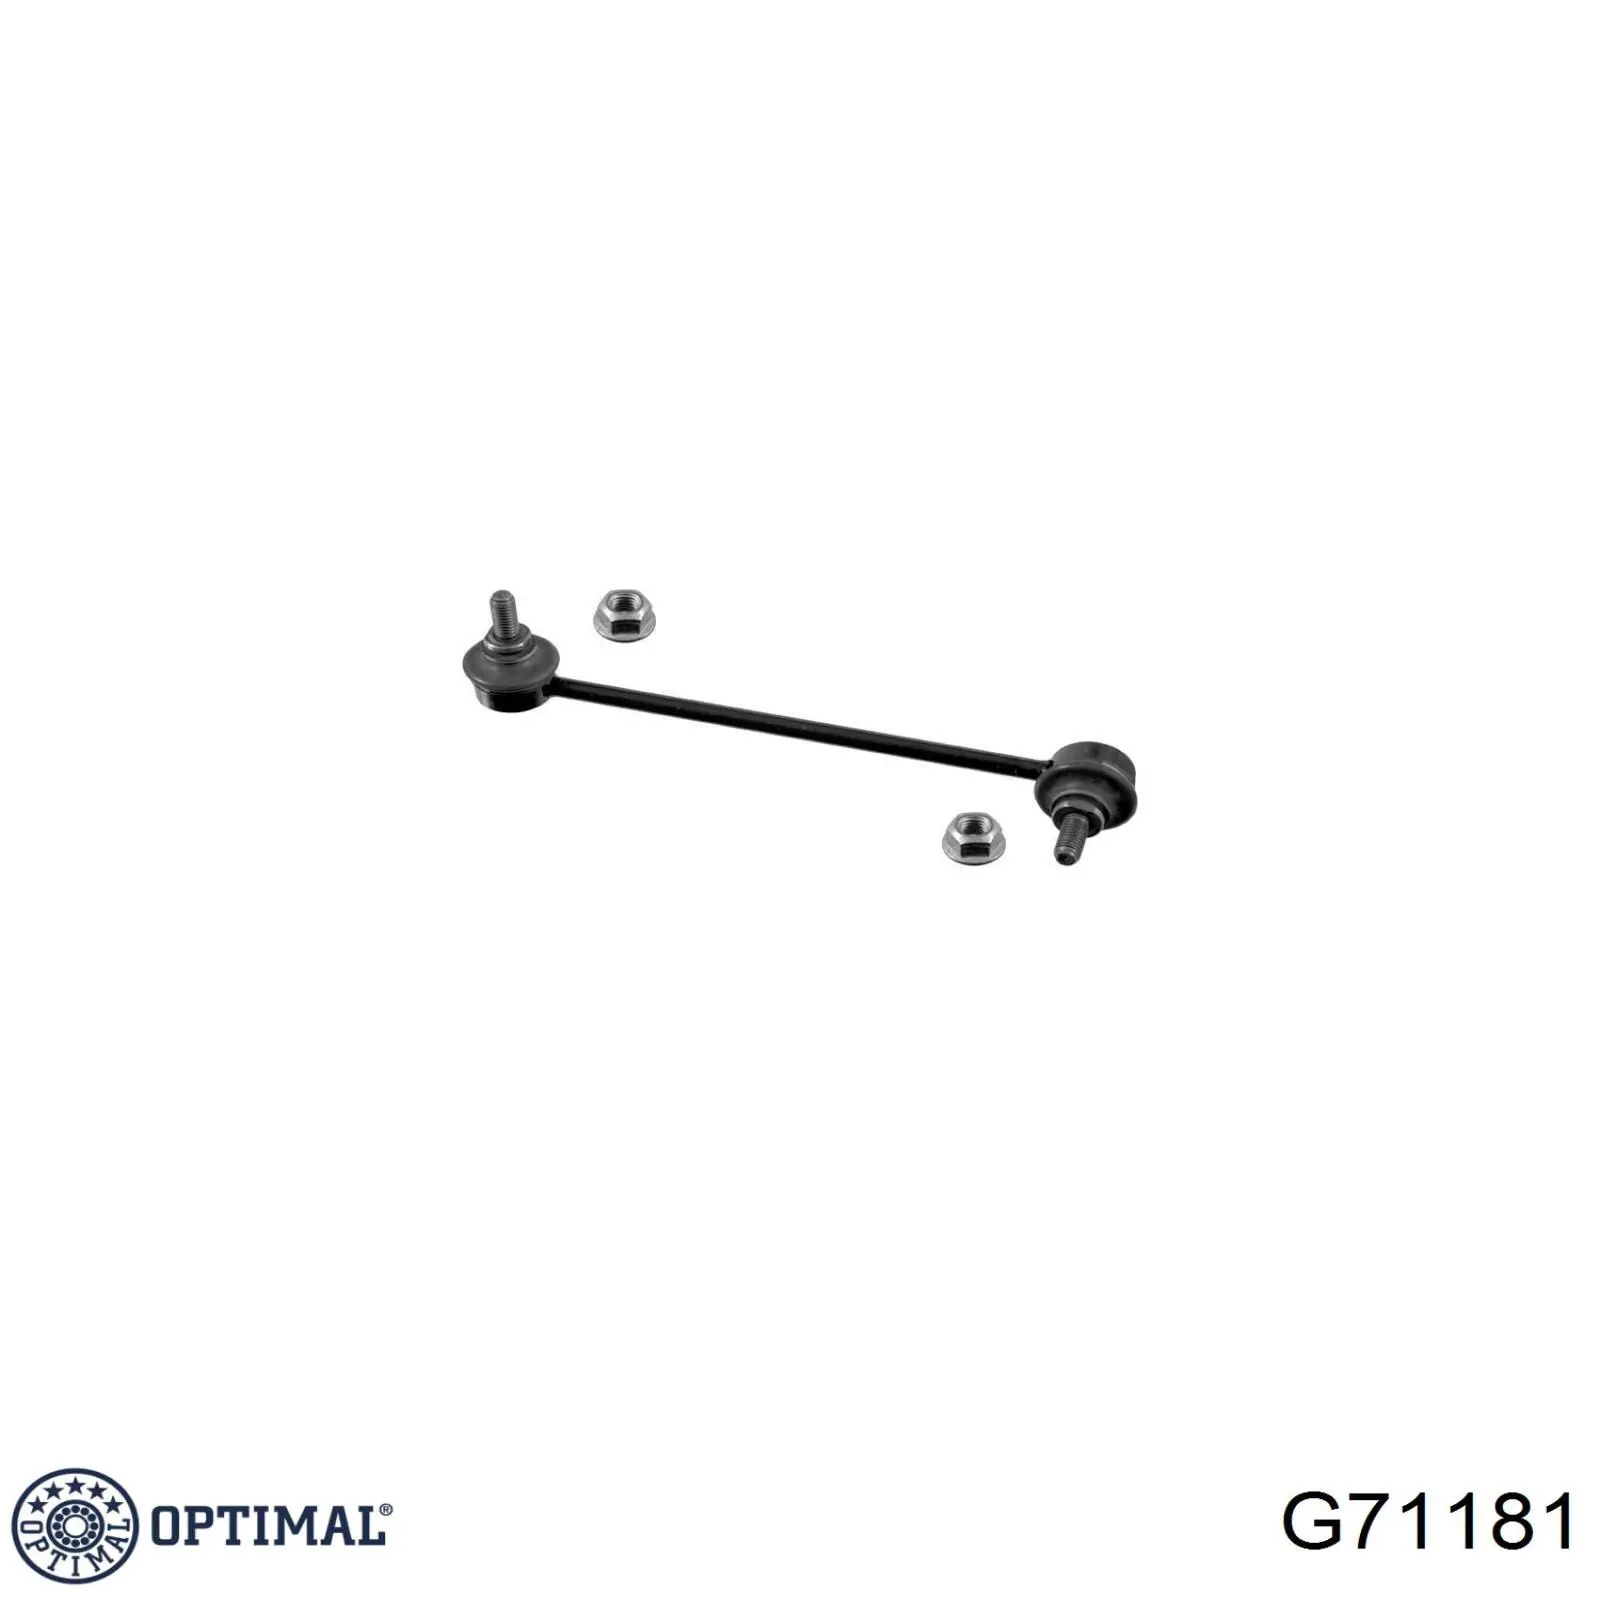 G71181 Optimal barra estabilizadora delantera derecha